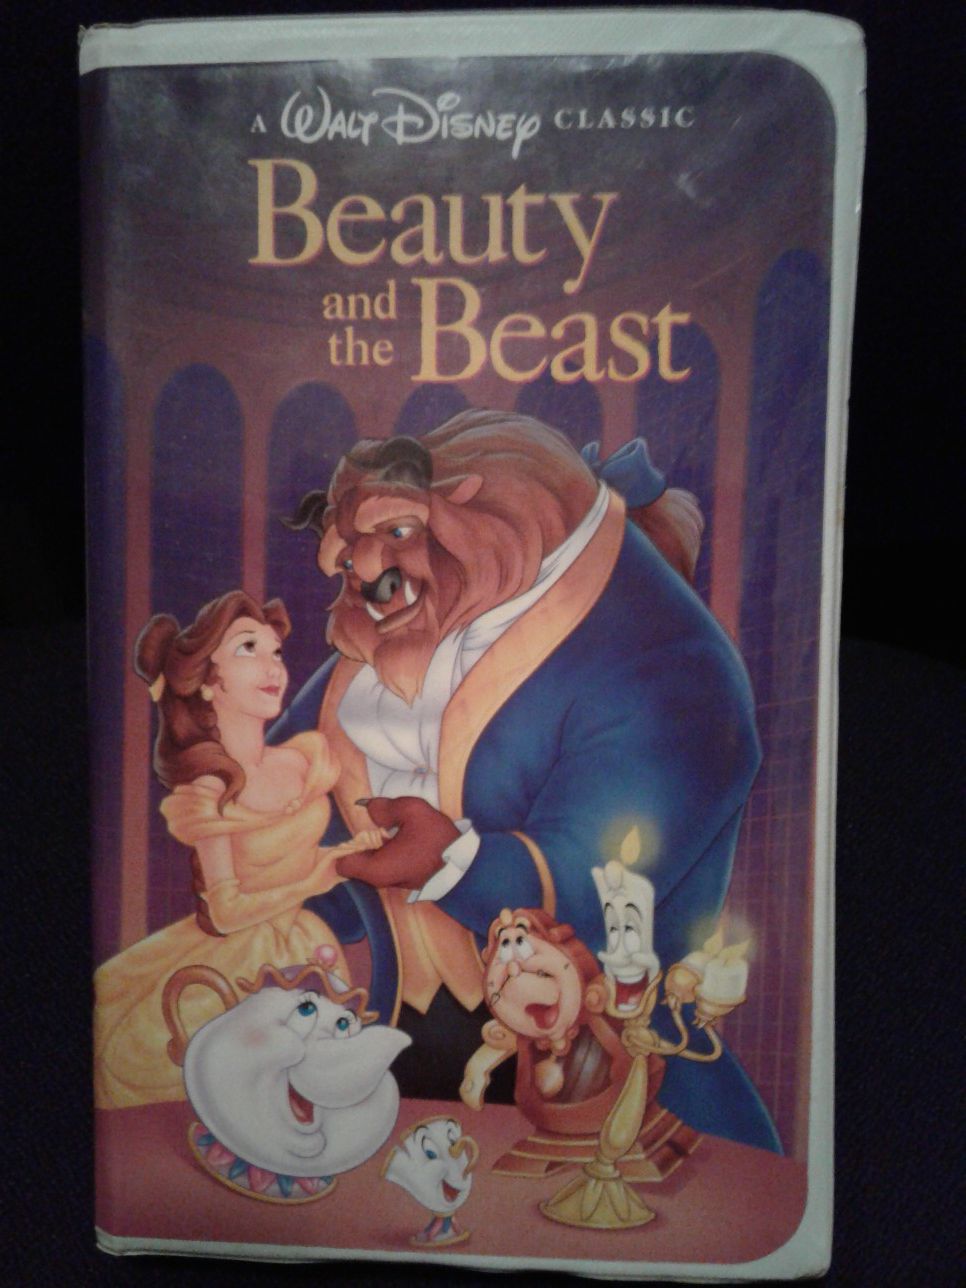 3 Black Diamond Disney VCR Movies Beauty & the Beast